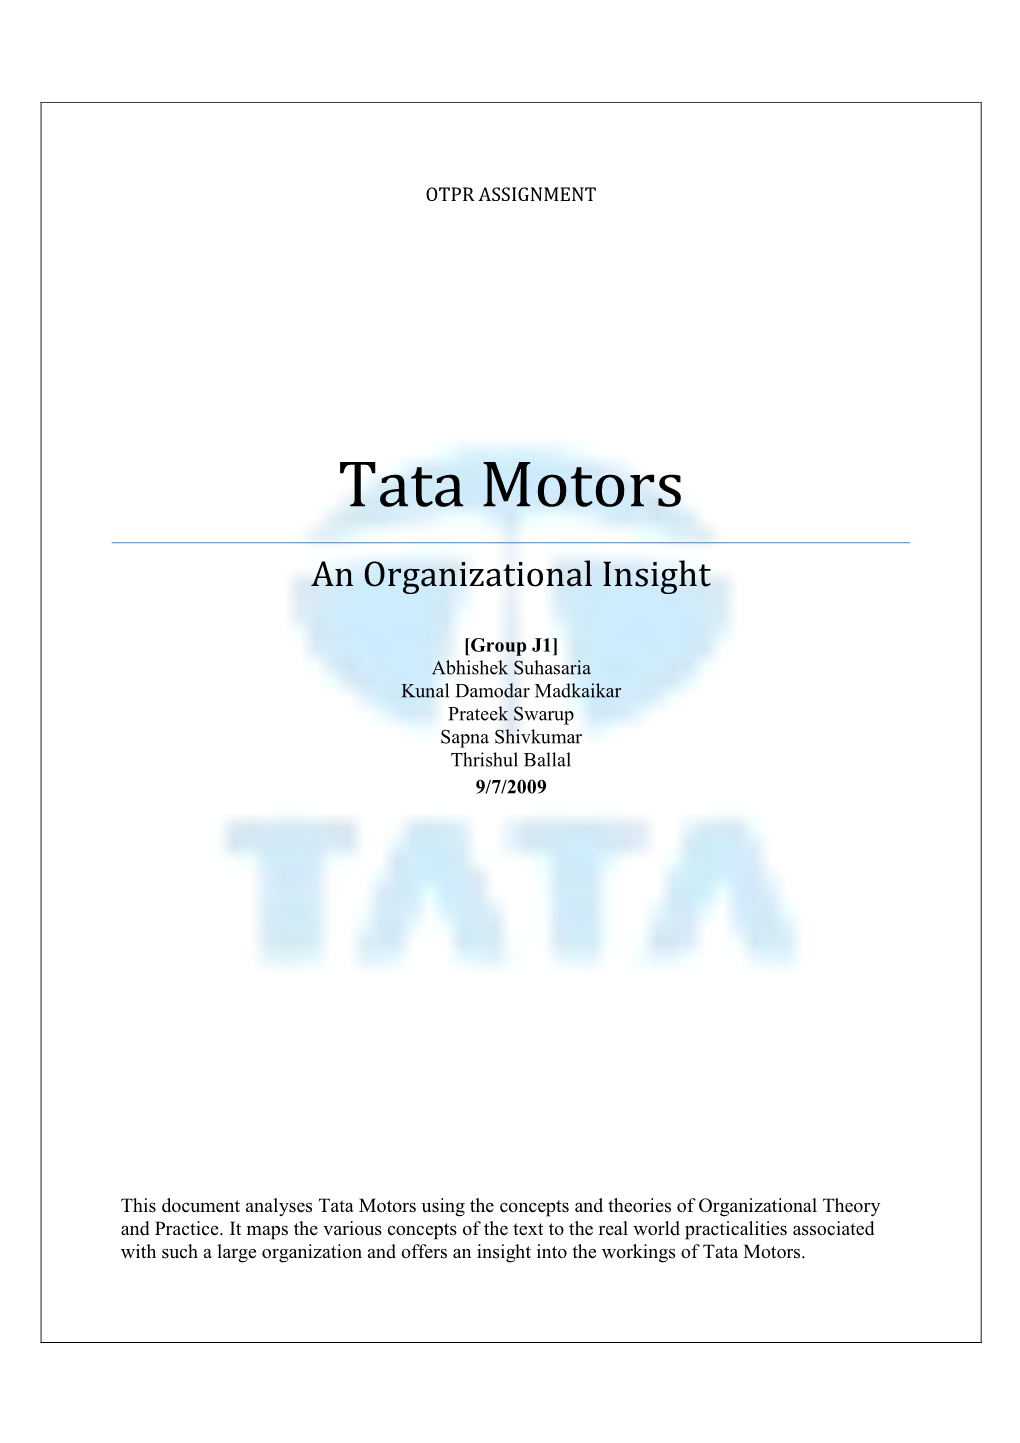 Tata Motors an Organizational Insight